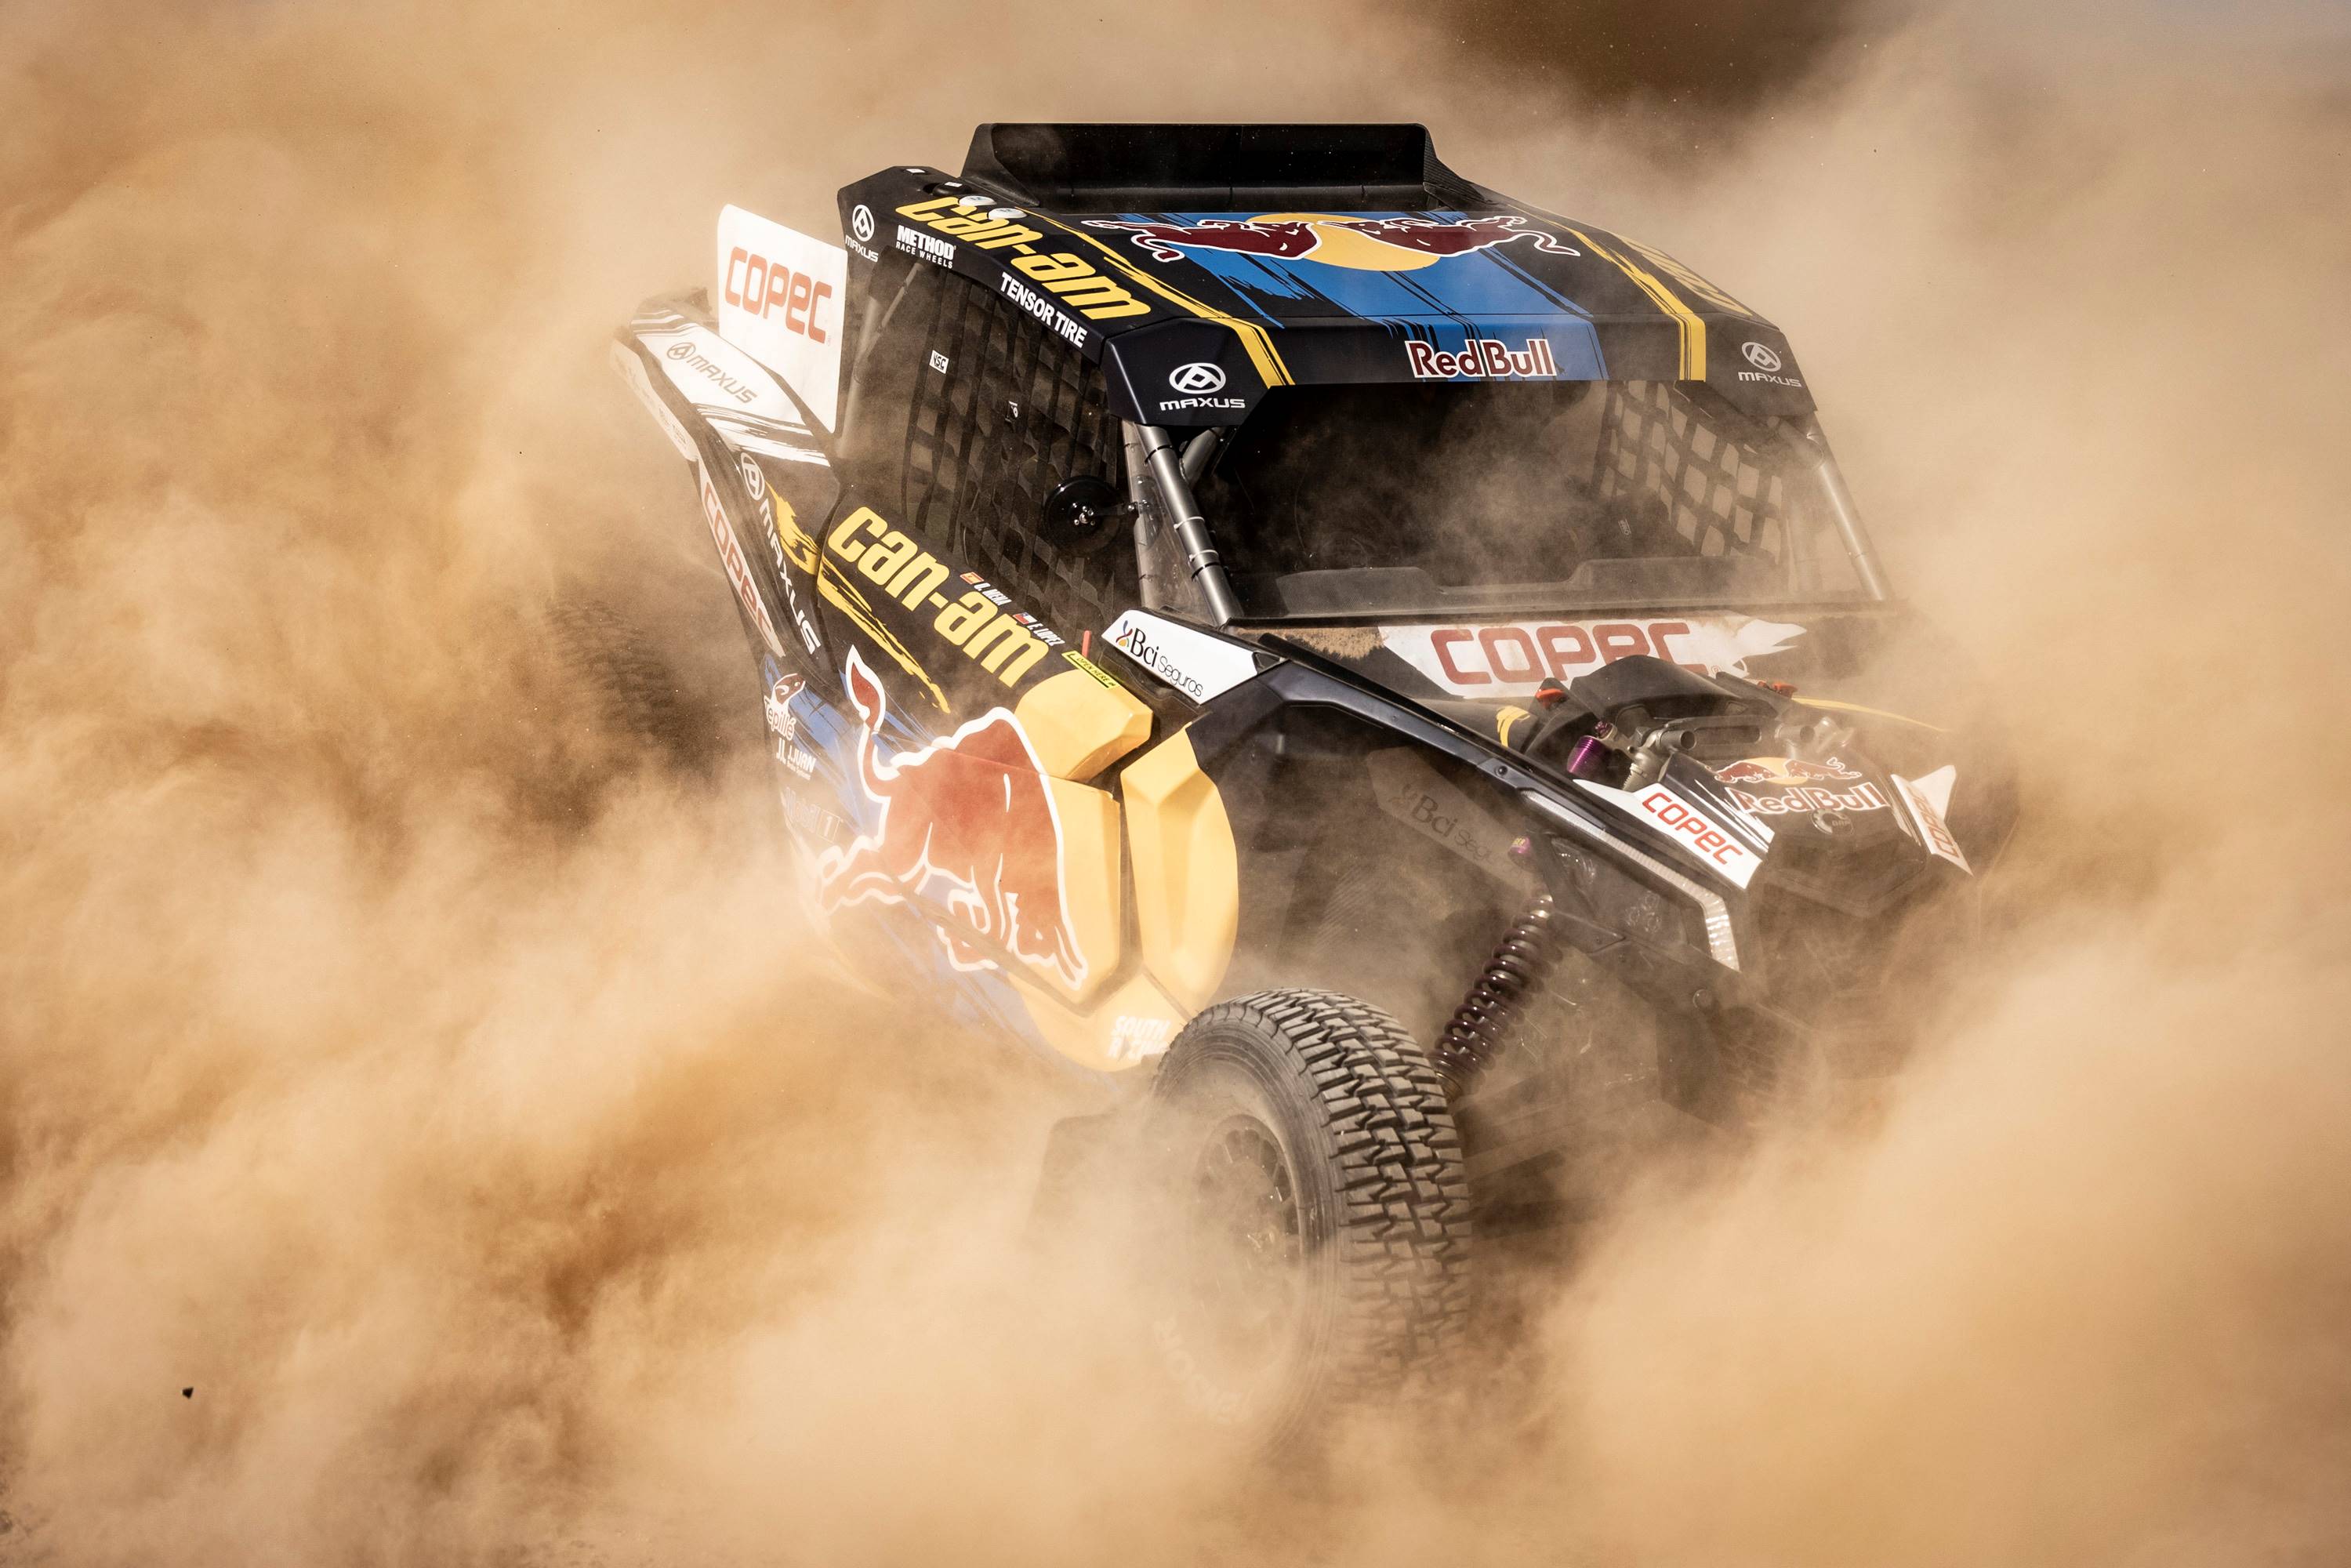 Maverick x3 en el desierto saudí rodeado de polvo